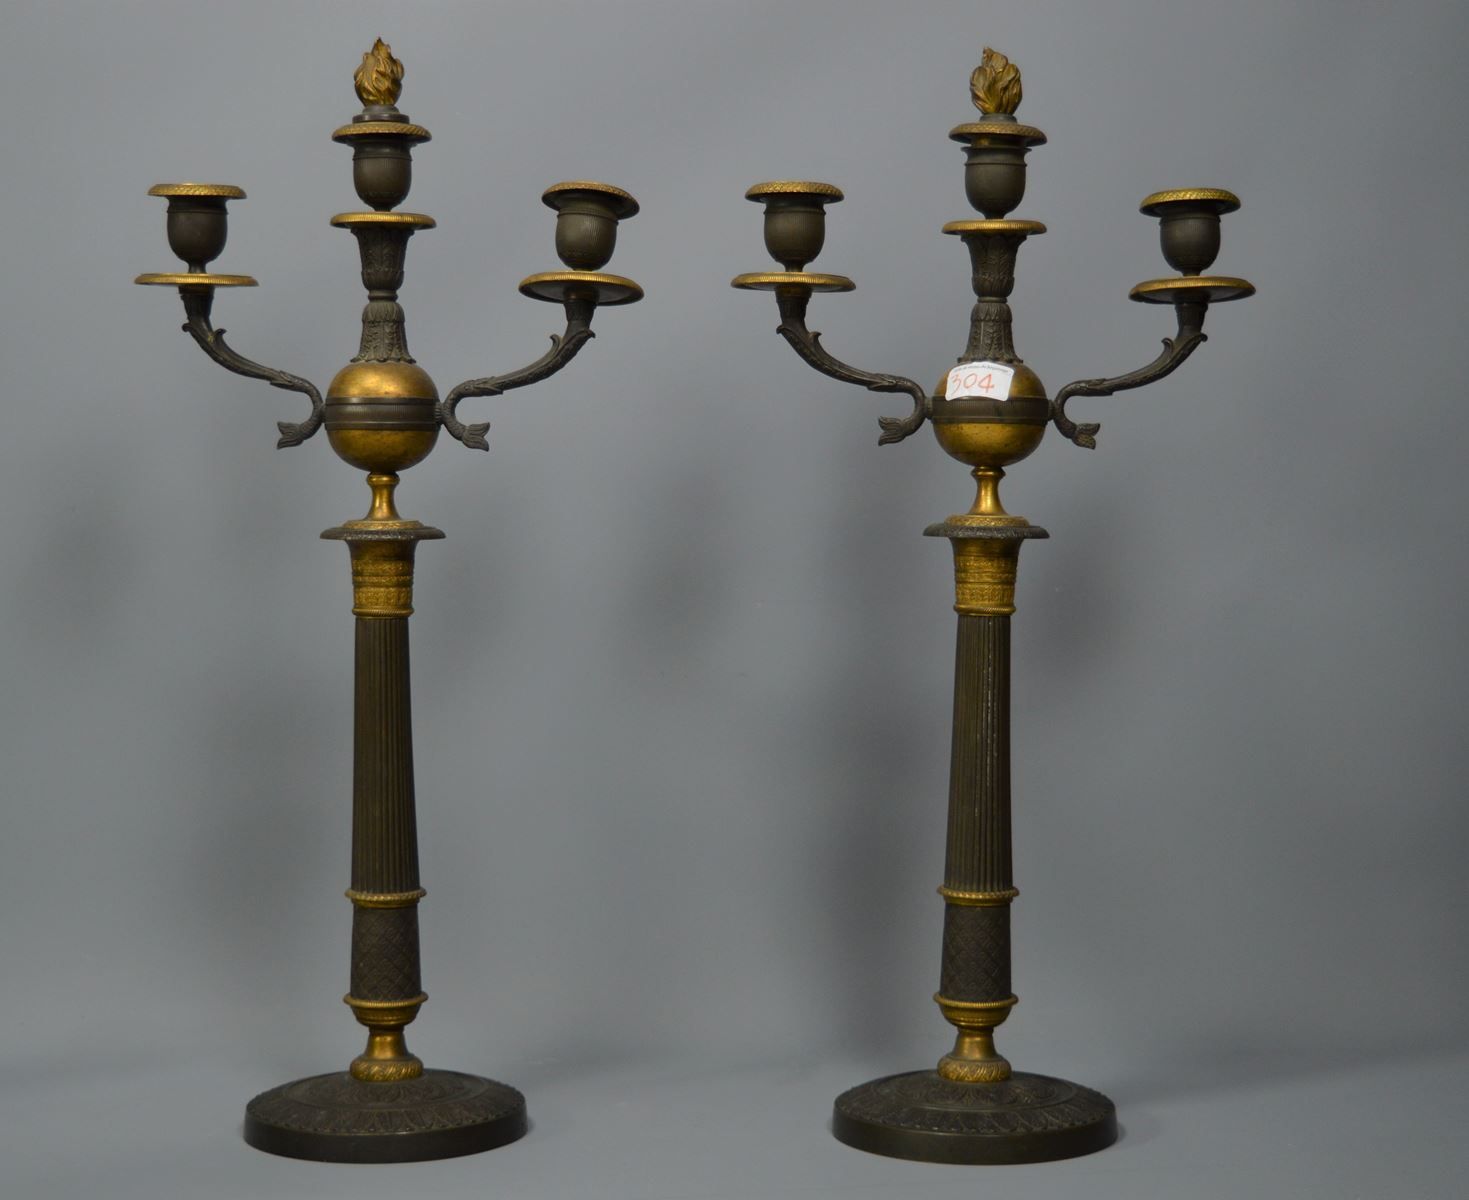 Null 帝国风格的一对青铜烛台，有2种颜色 - 55厘米